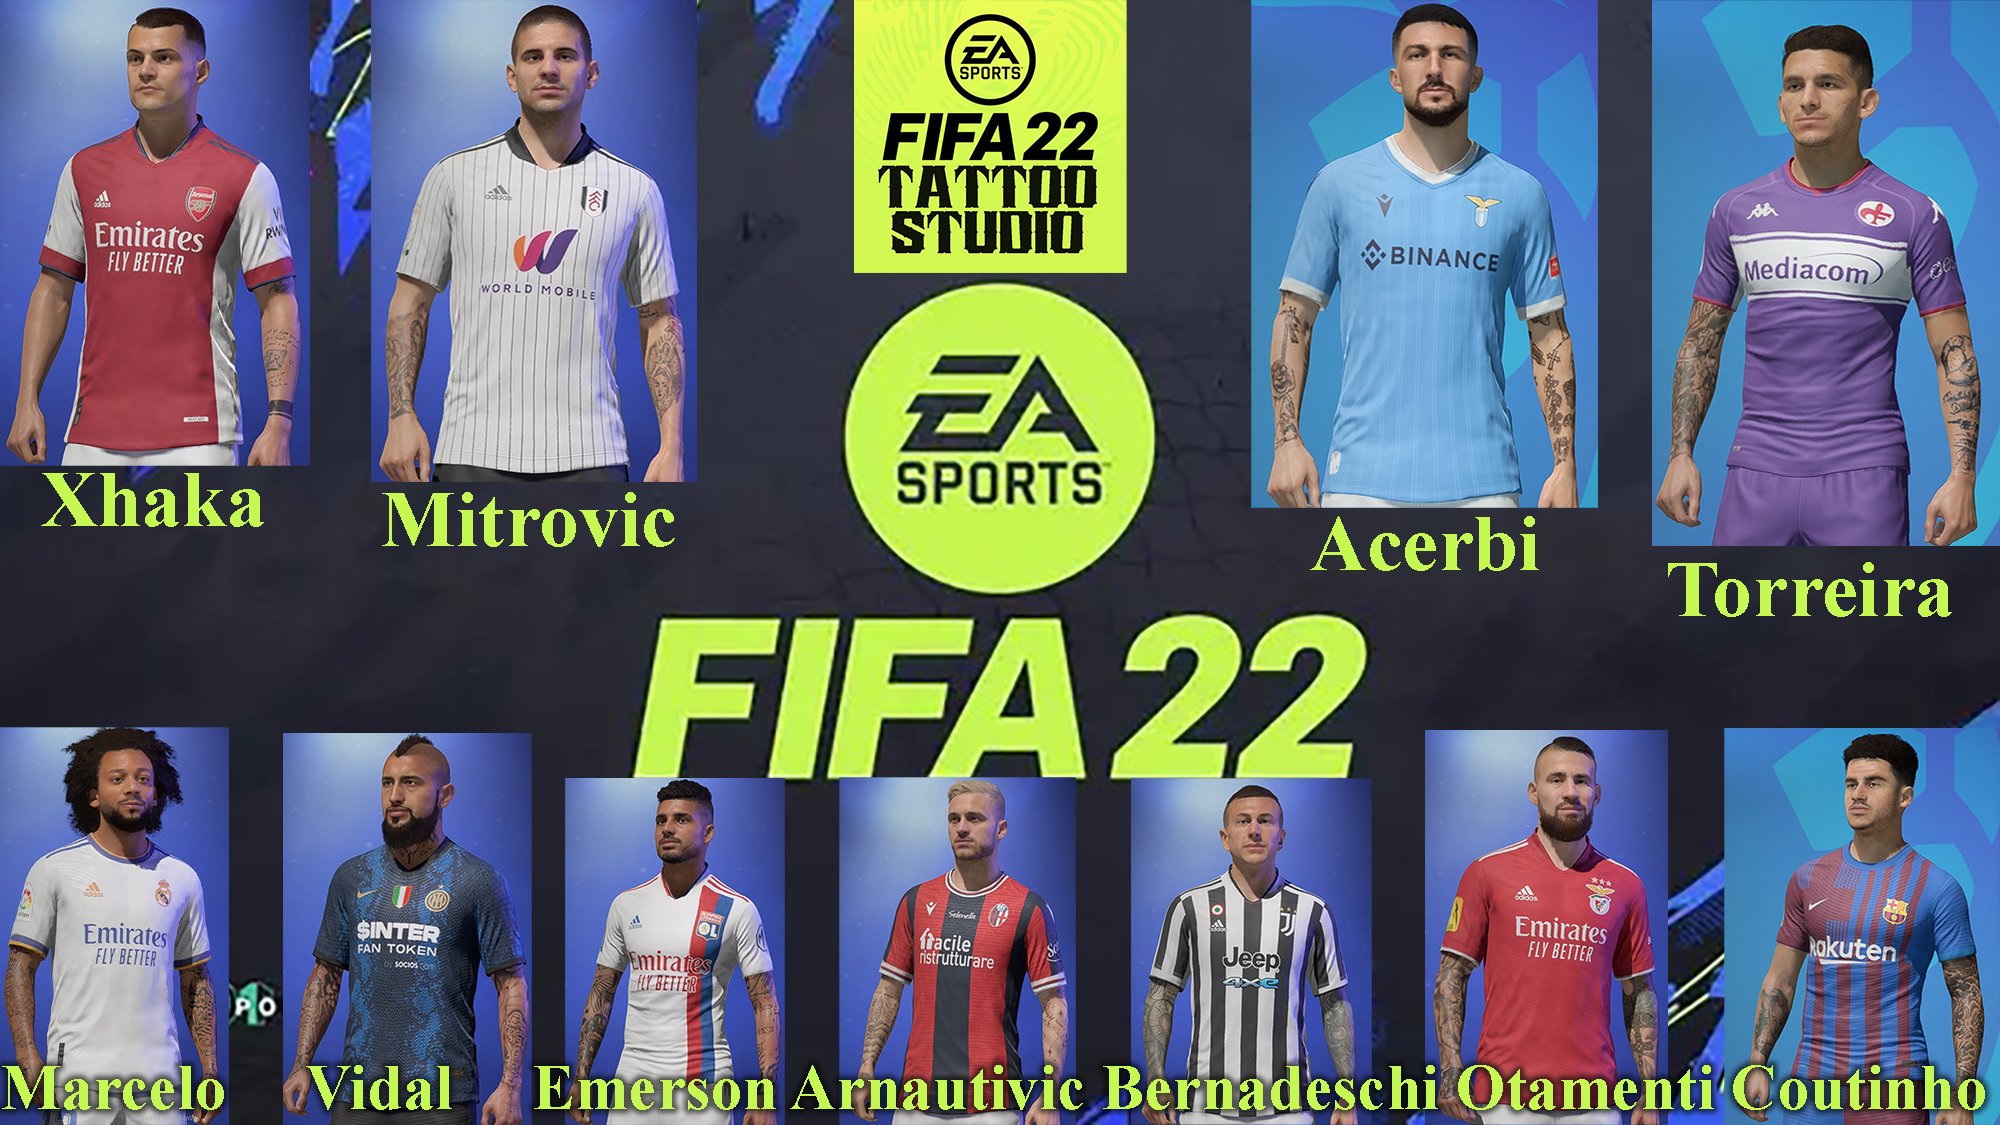 Blue_Sky Facemaker on X: FIFA 22 Face Mod Uroš Račić - Valencia Free  download:  Enjoy! #FIFA22 #mods   / X